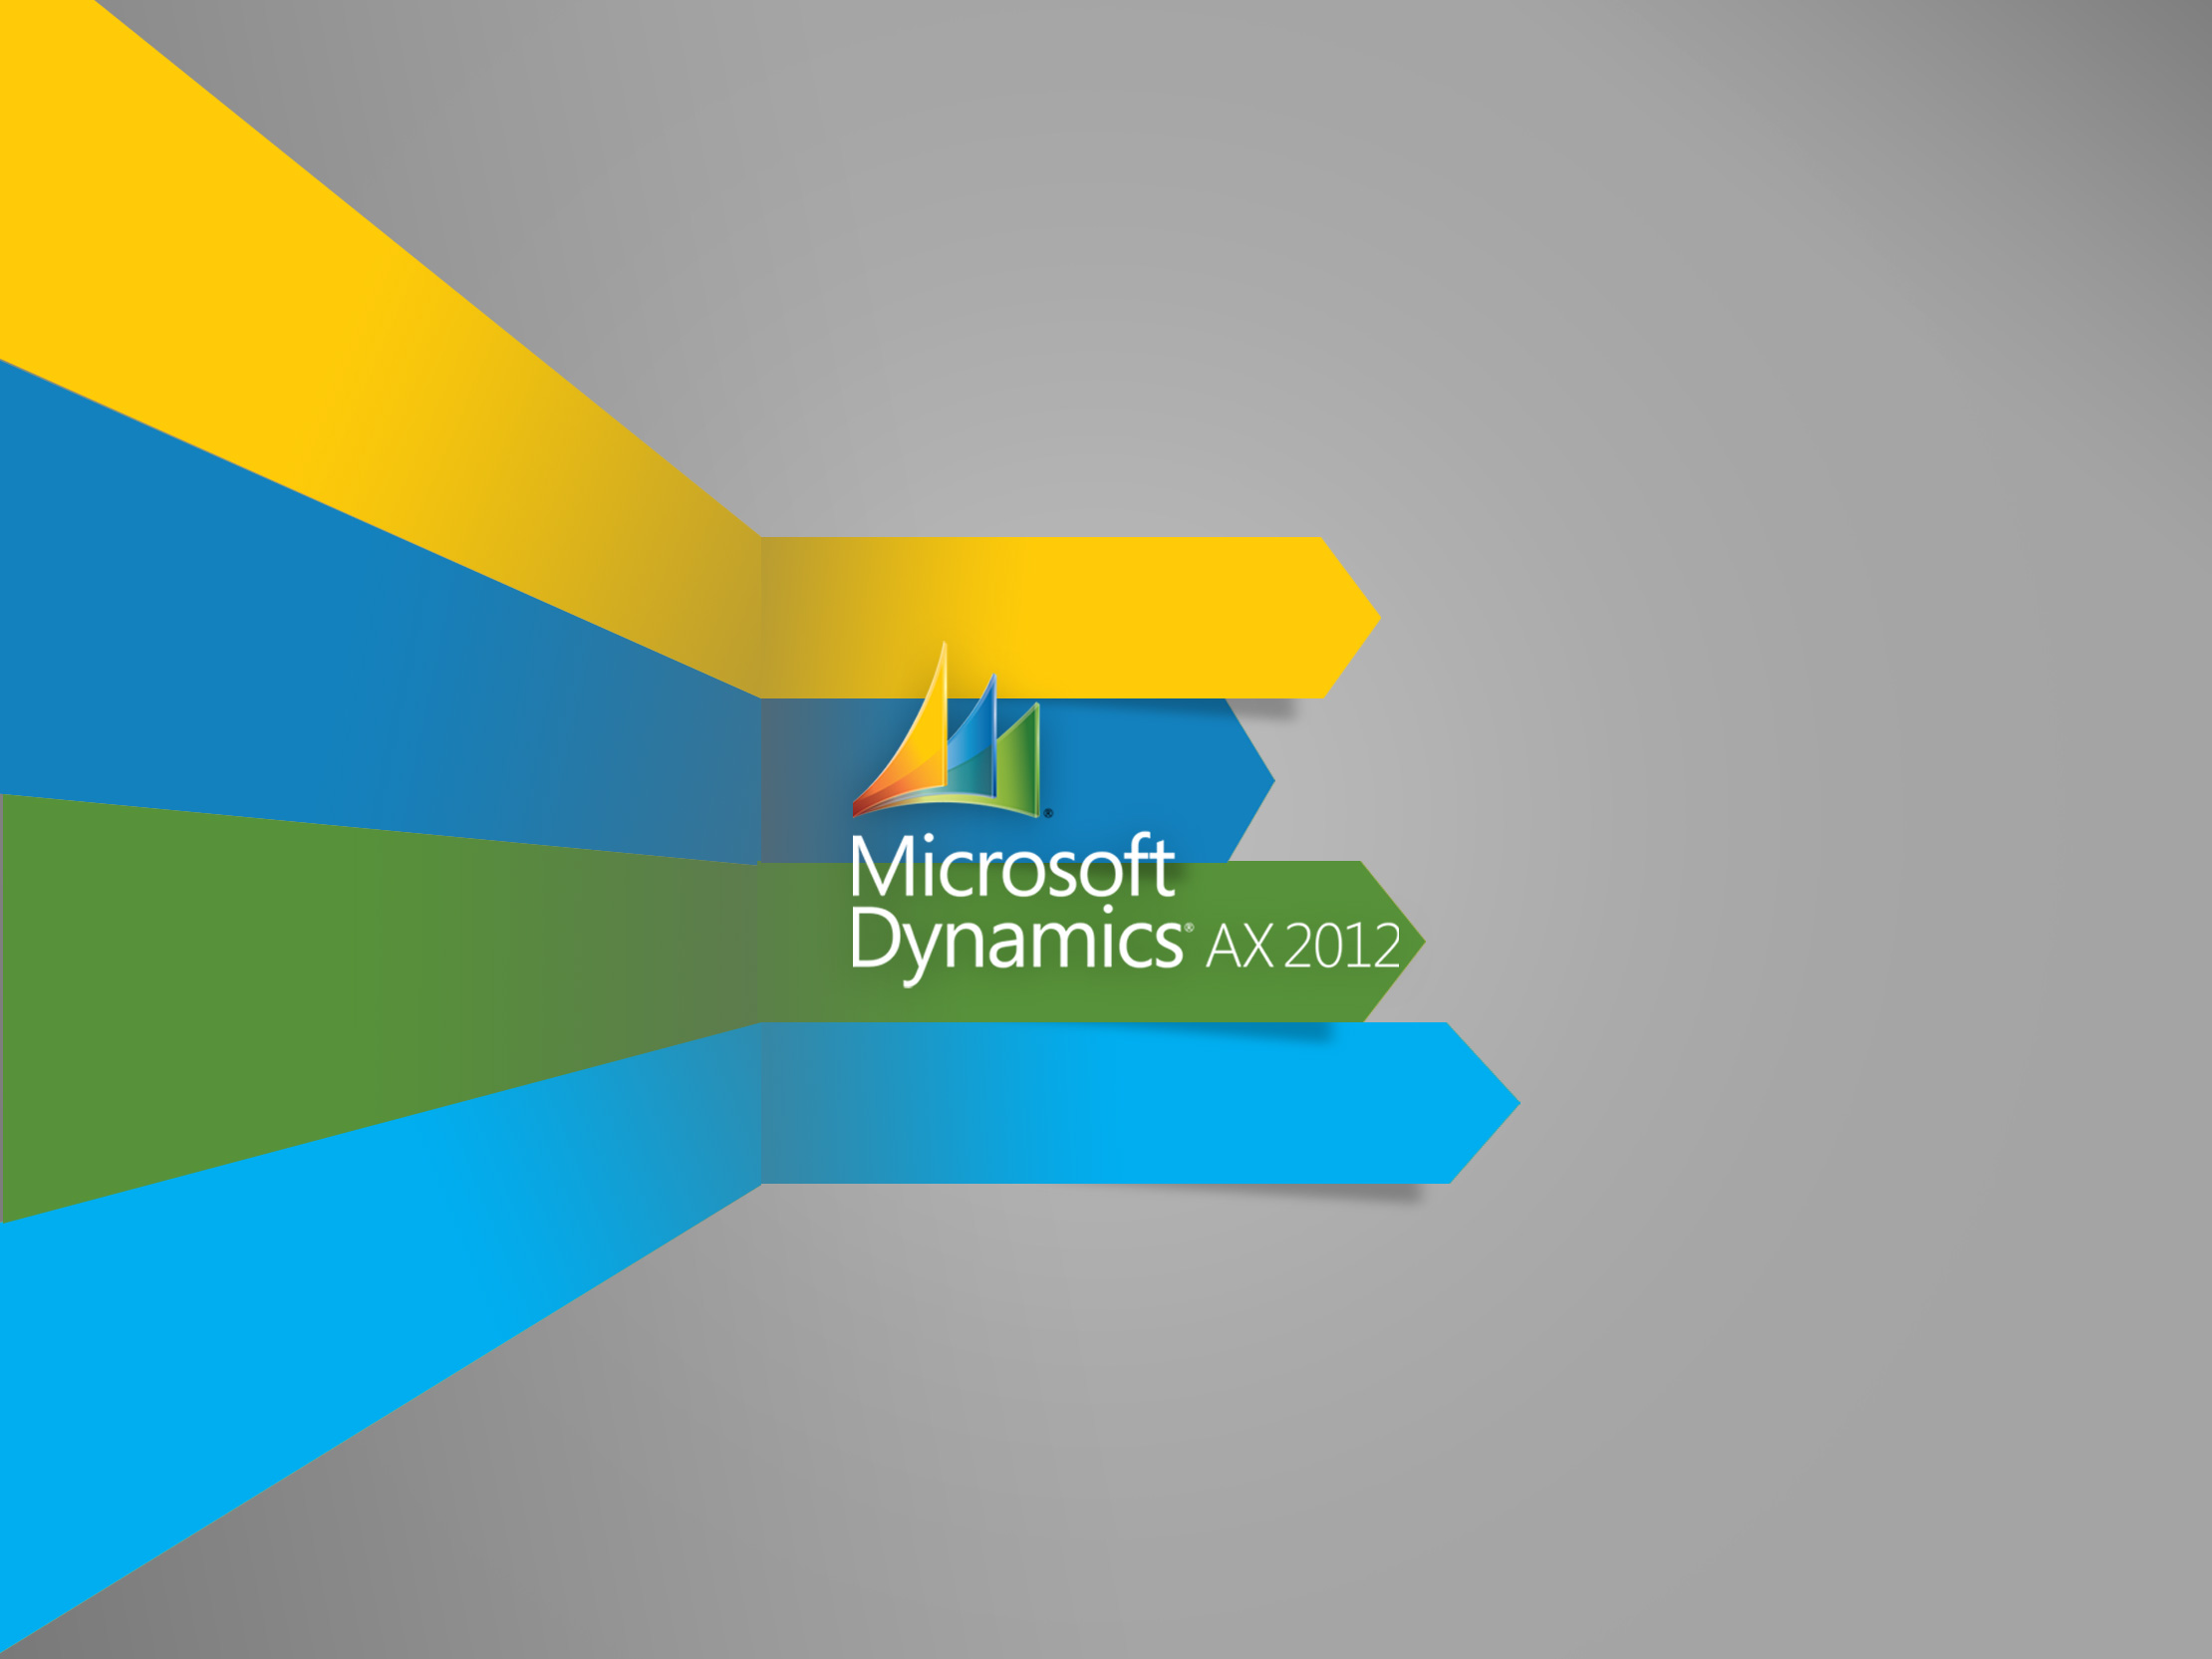  Debitormodulet i Microsoft Dynamics AX 2012